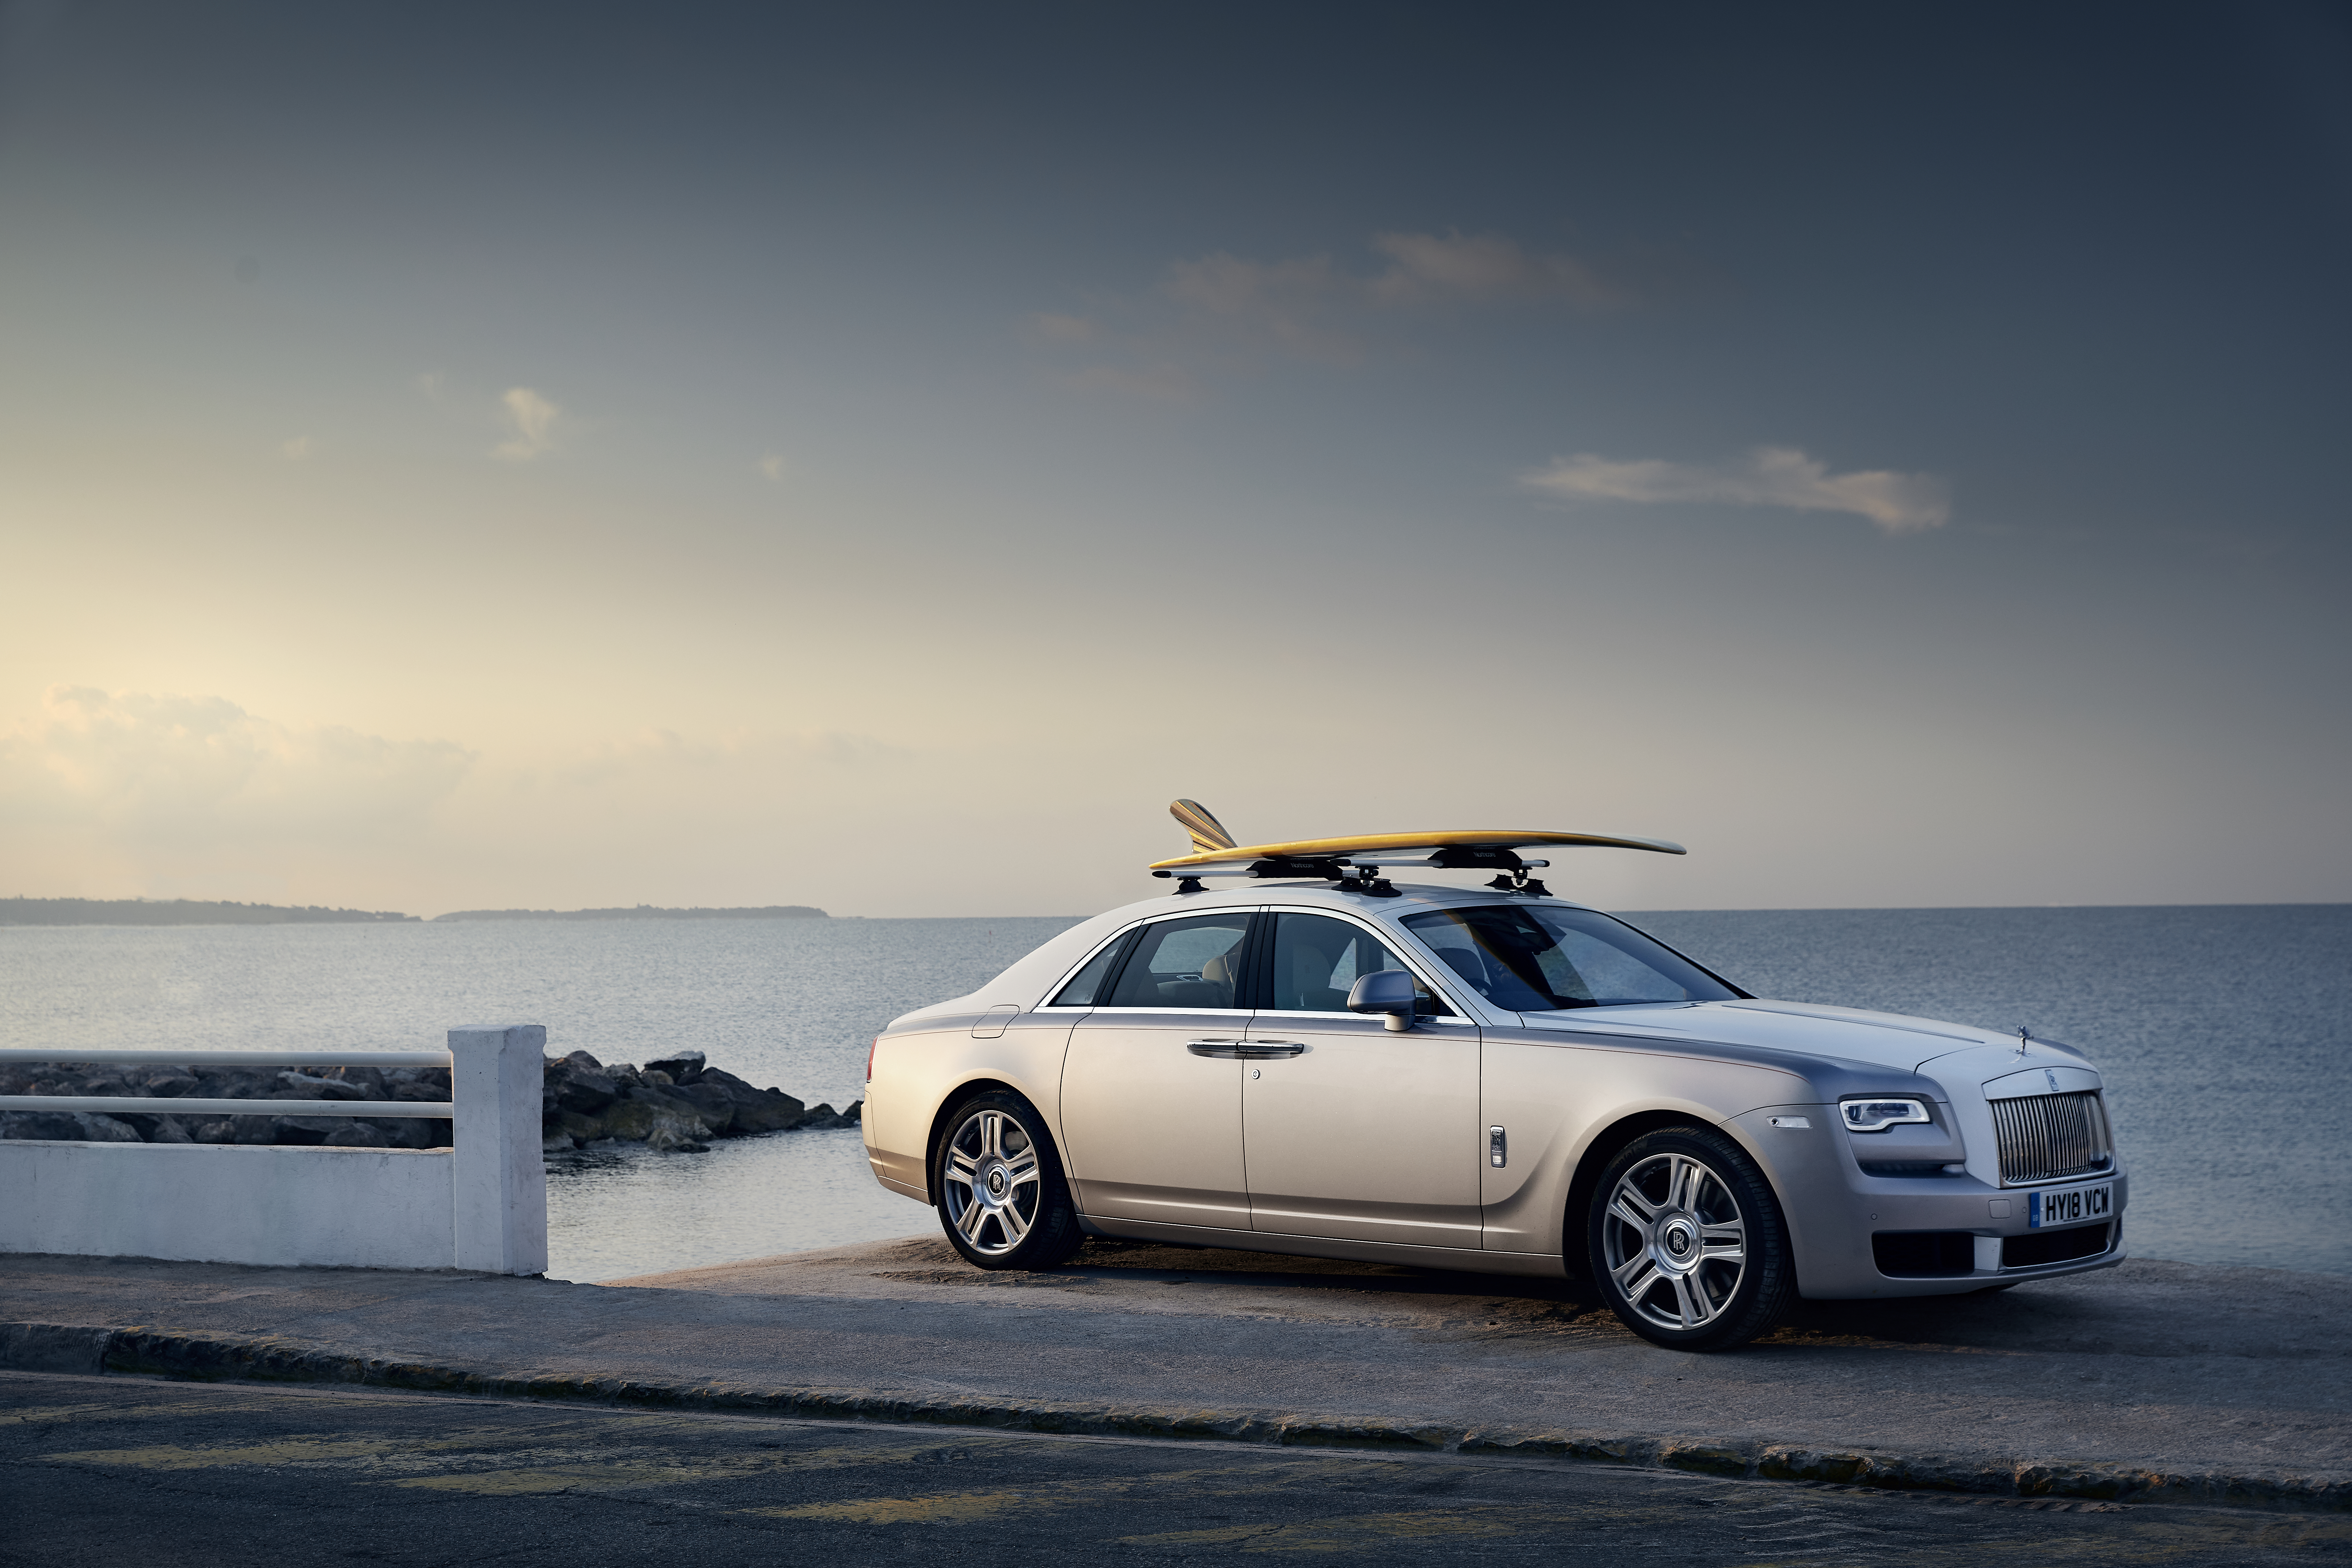 Rolls-Royce Motor Cars Arrives in Europe’s Summer Hotspots